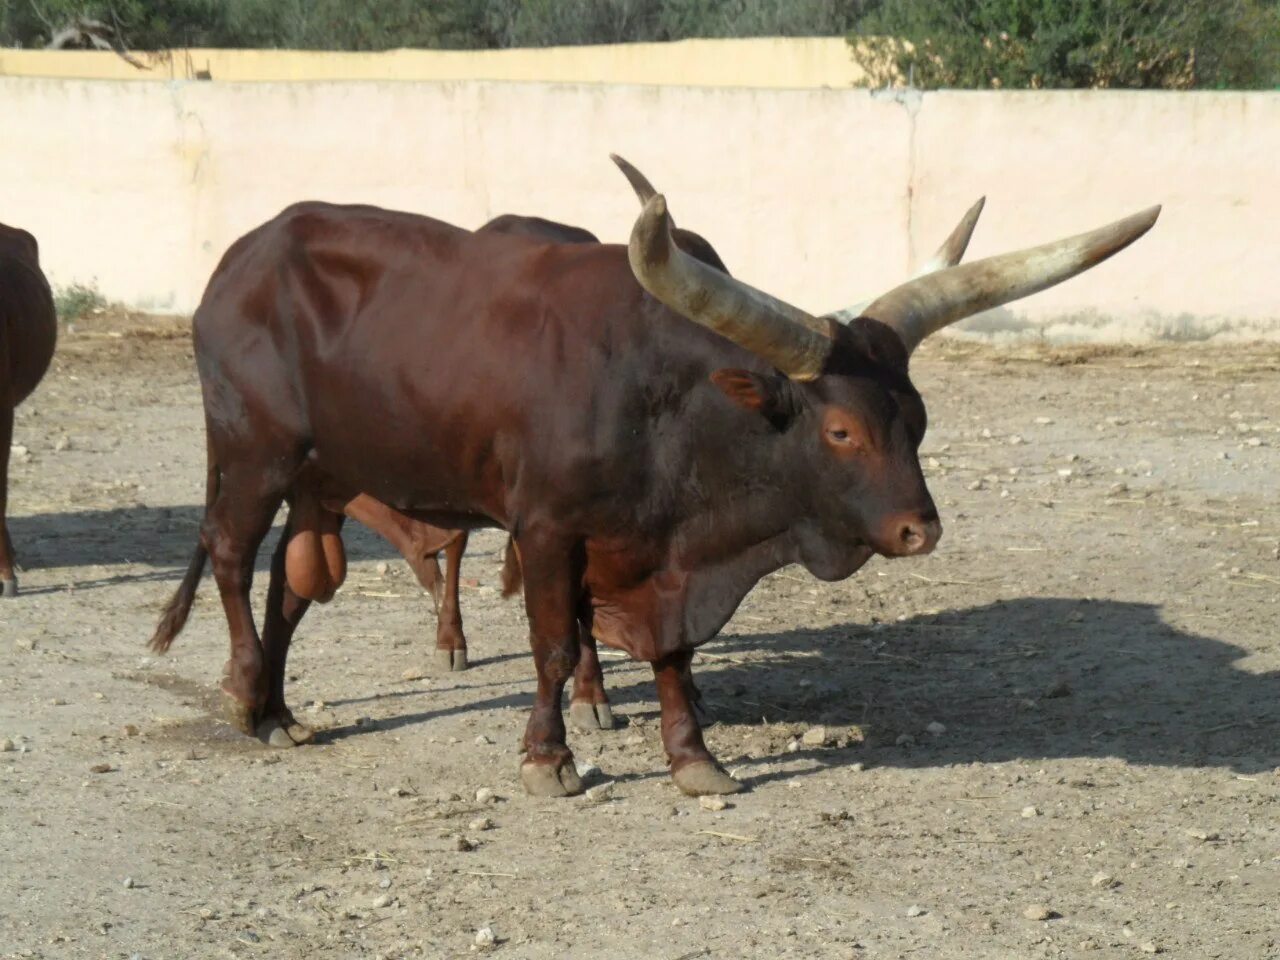 Bull cock